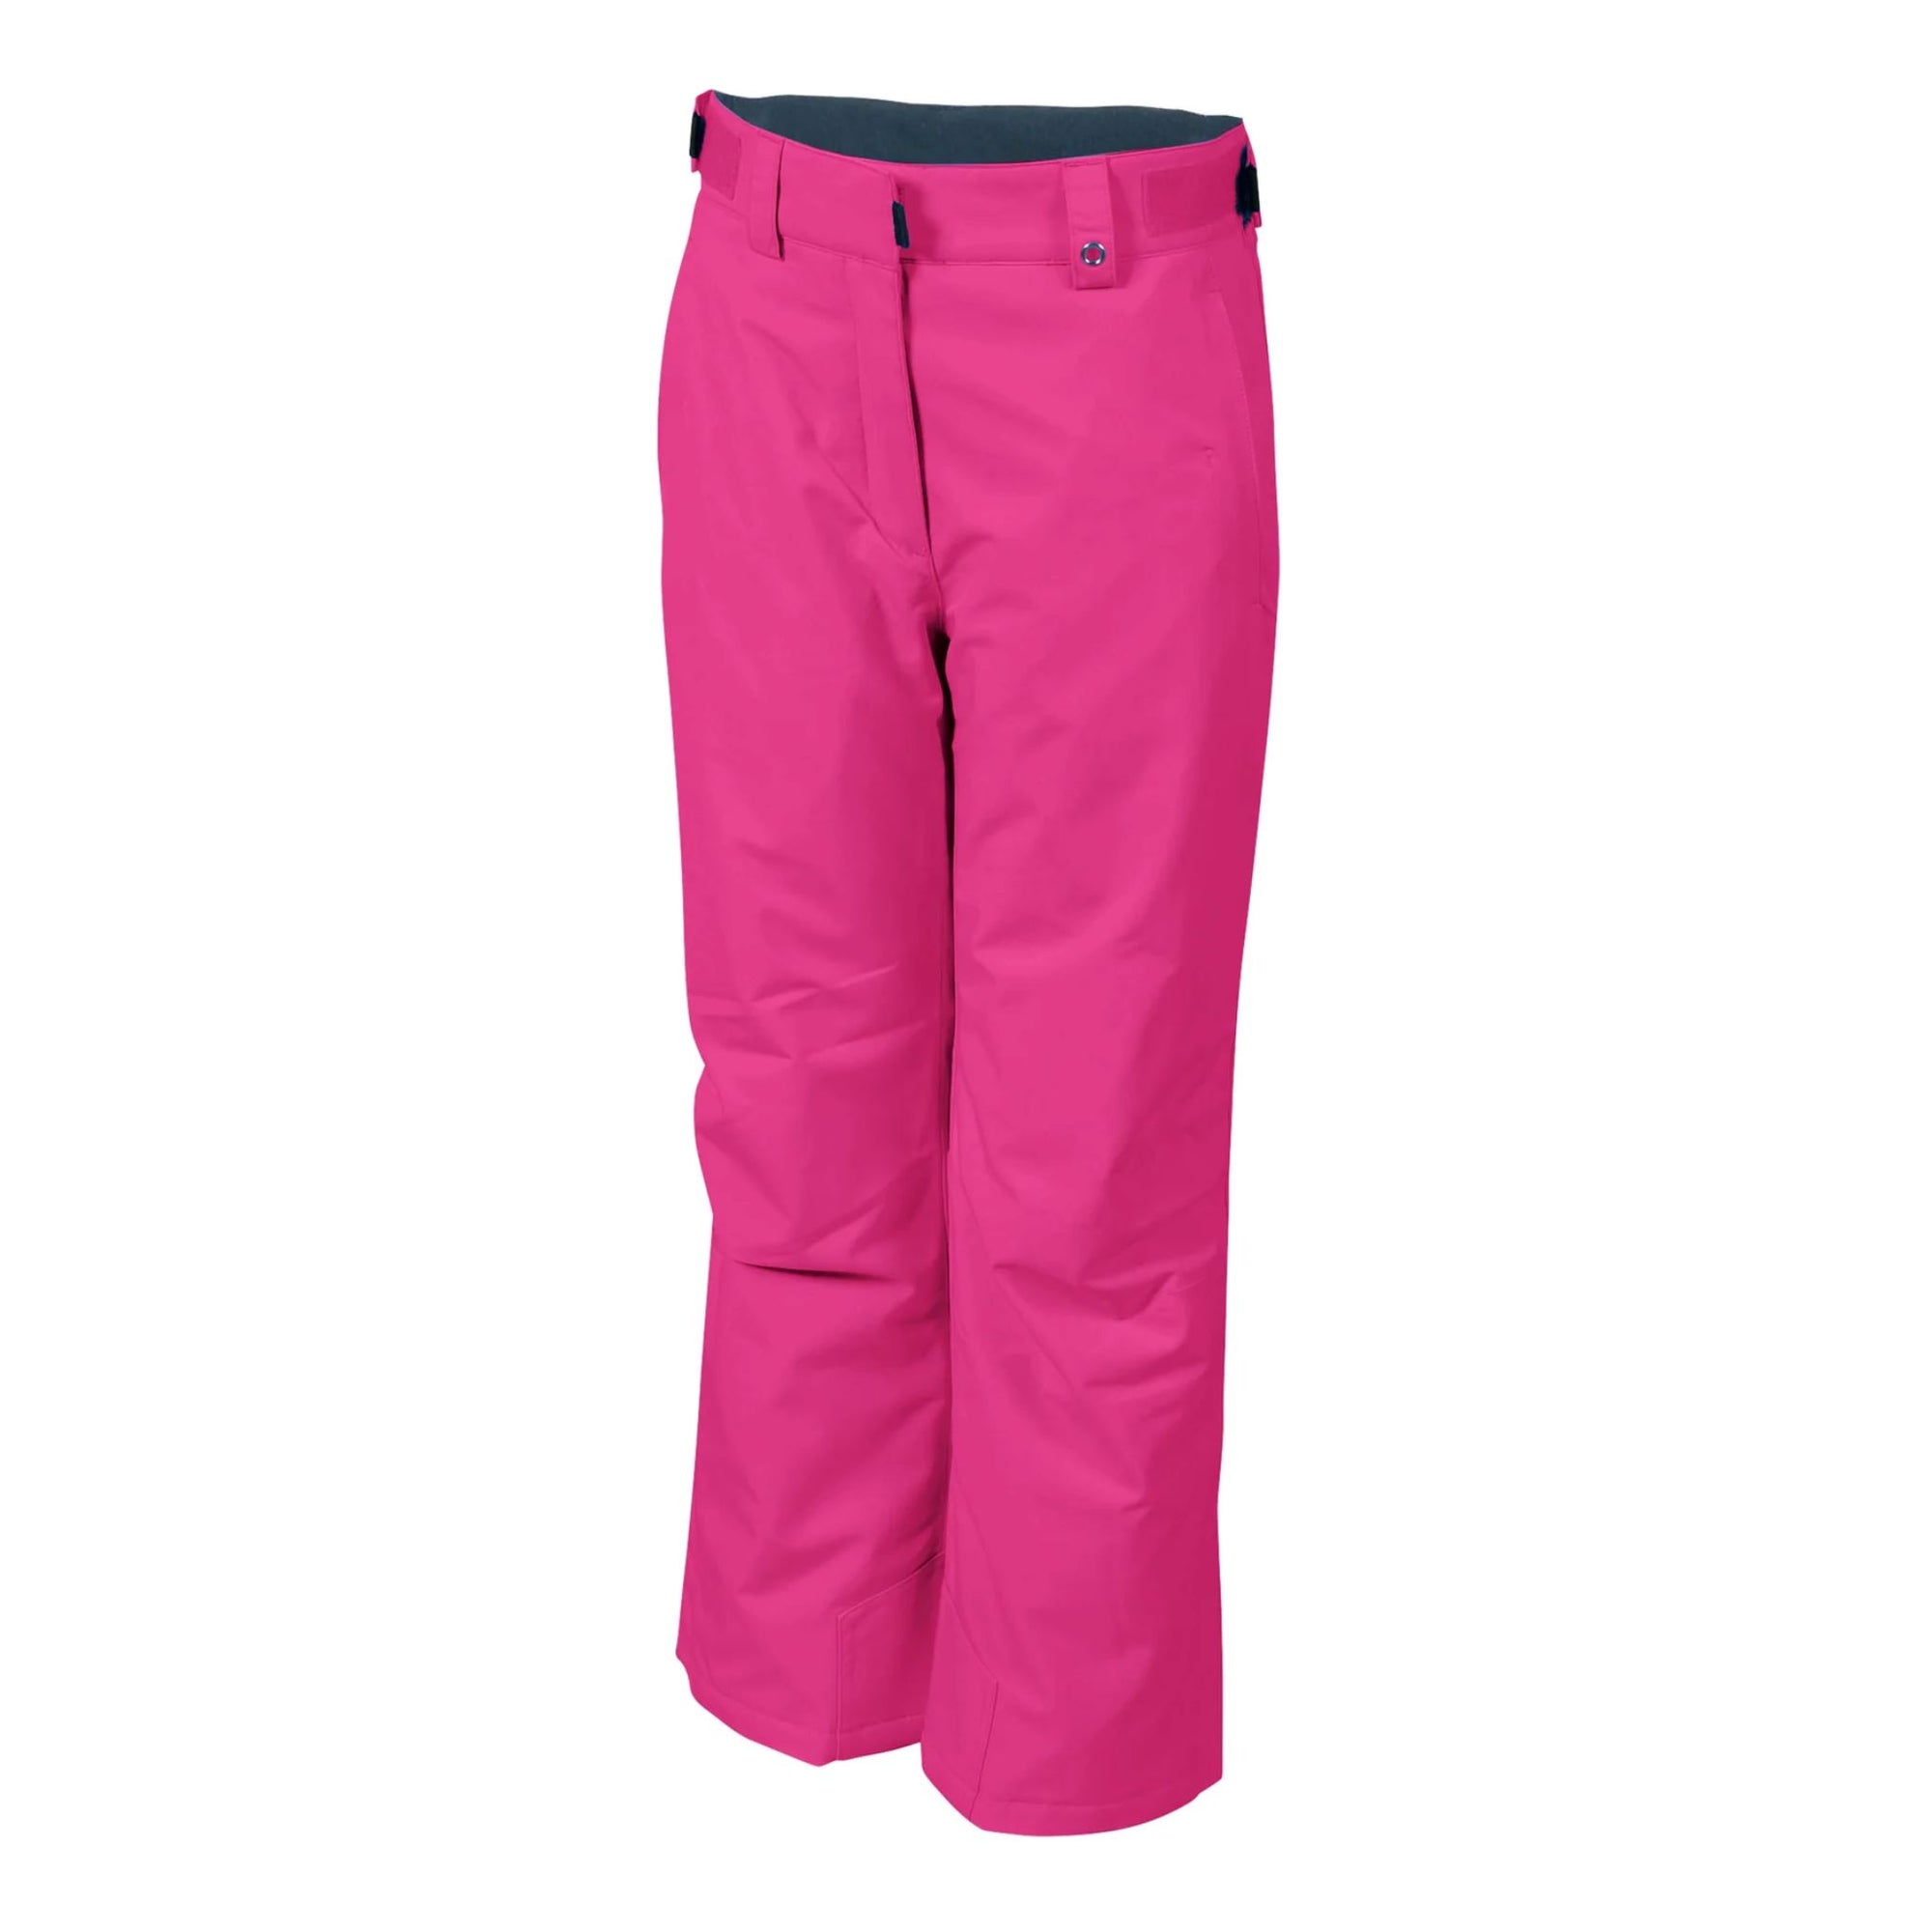 Girls Karbon Halo Pant - Hot Pink Pants Karbon 8 INTL / 8 AU 